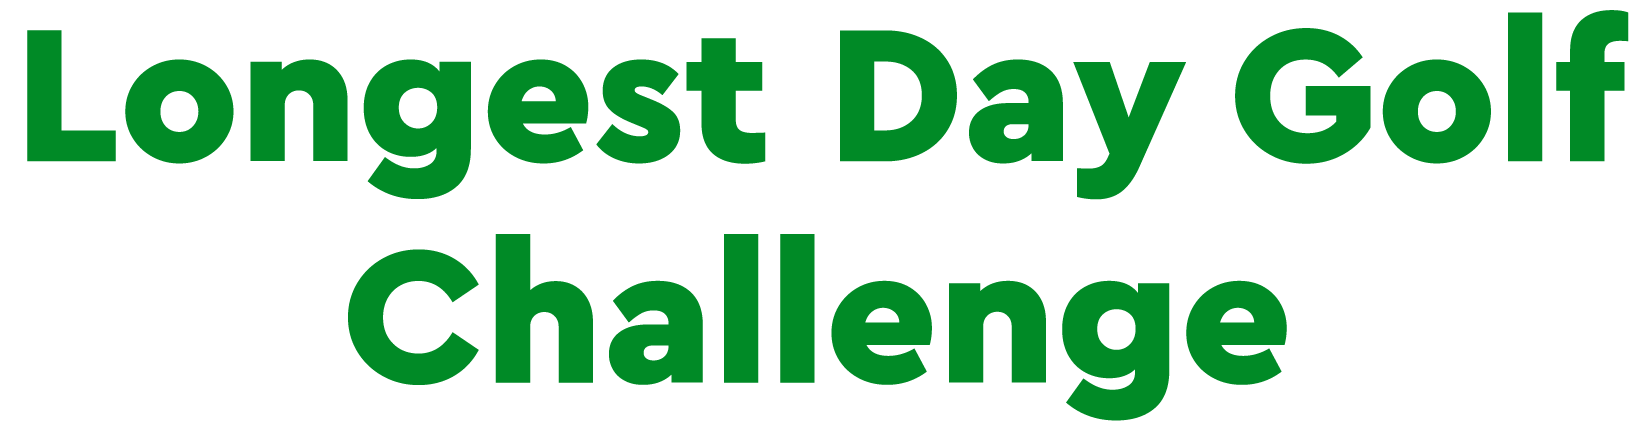 Longest Day Golf Challenge logo